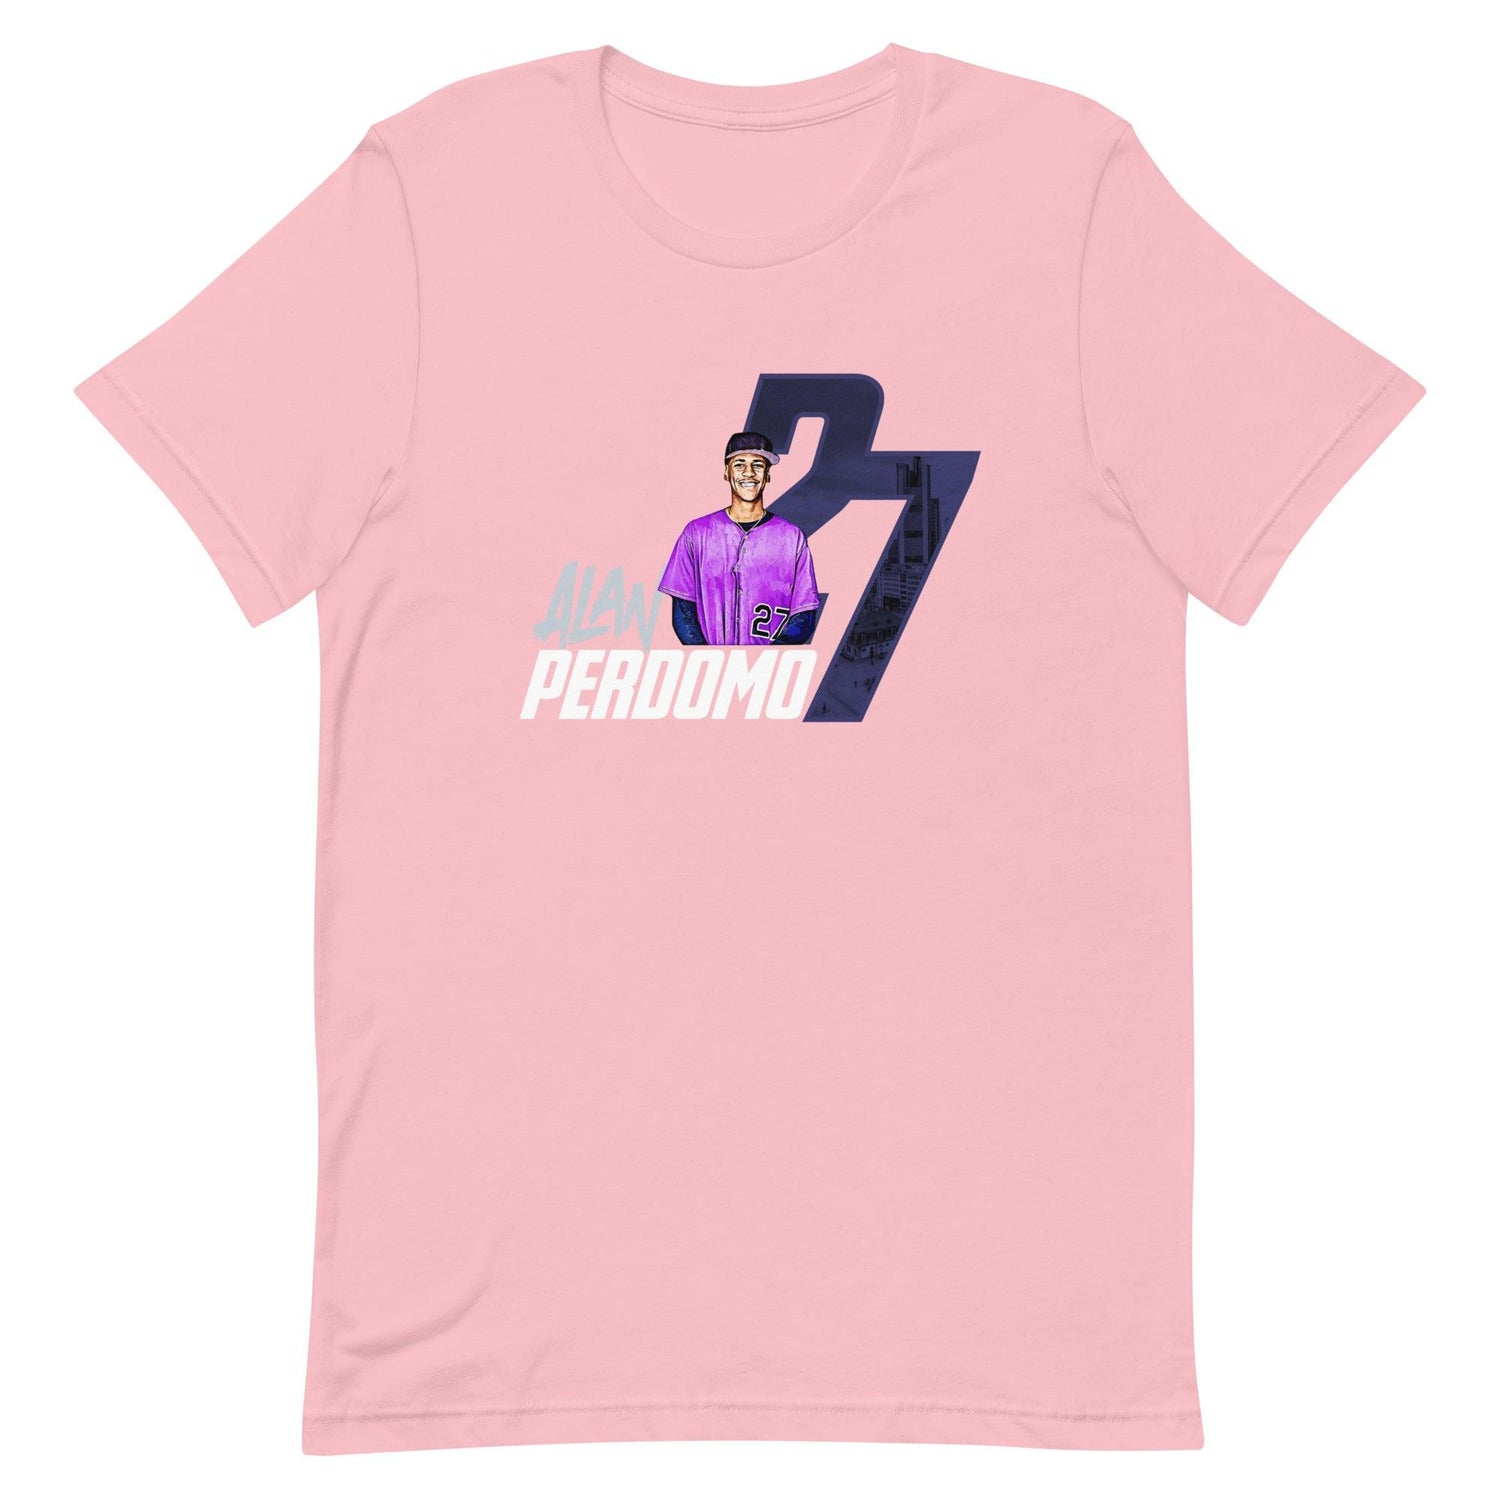 Alan Perdomo "Gameday" t-shirt - Fan Arch